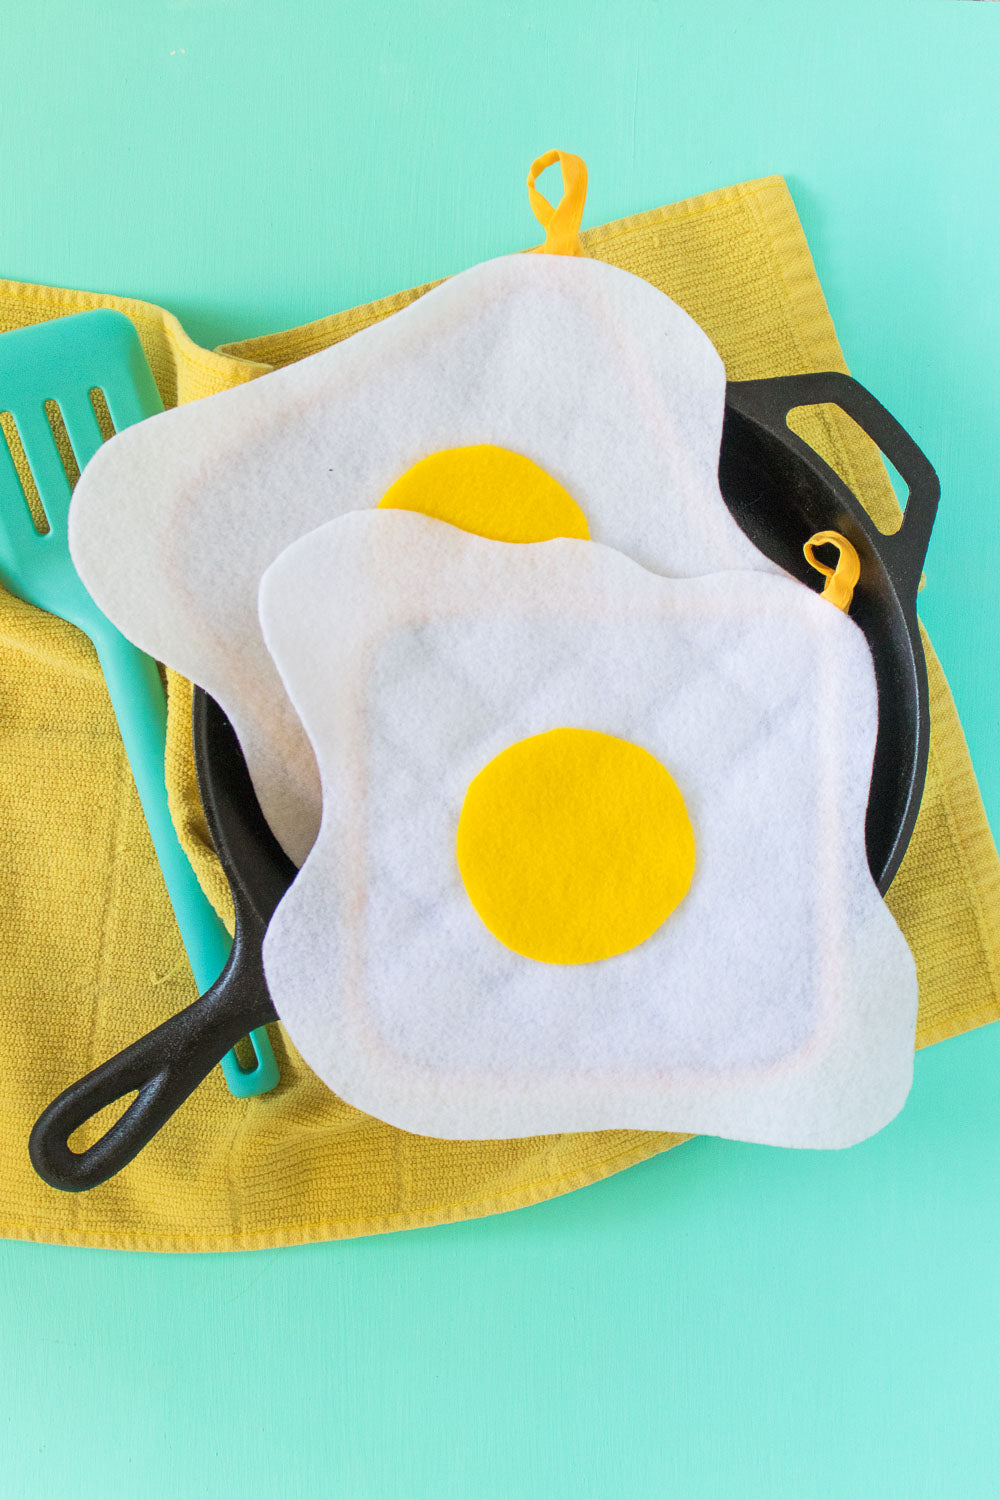 DIY No-Sew Fried Egg Mitts